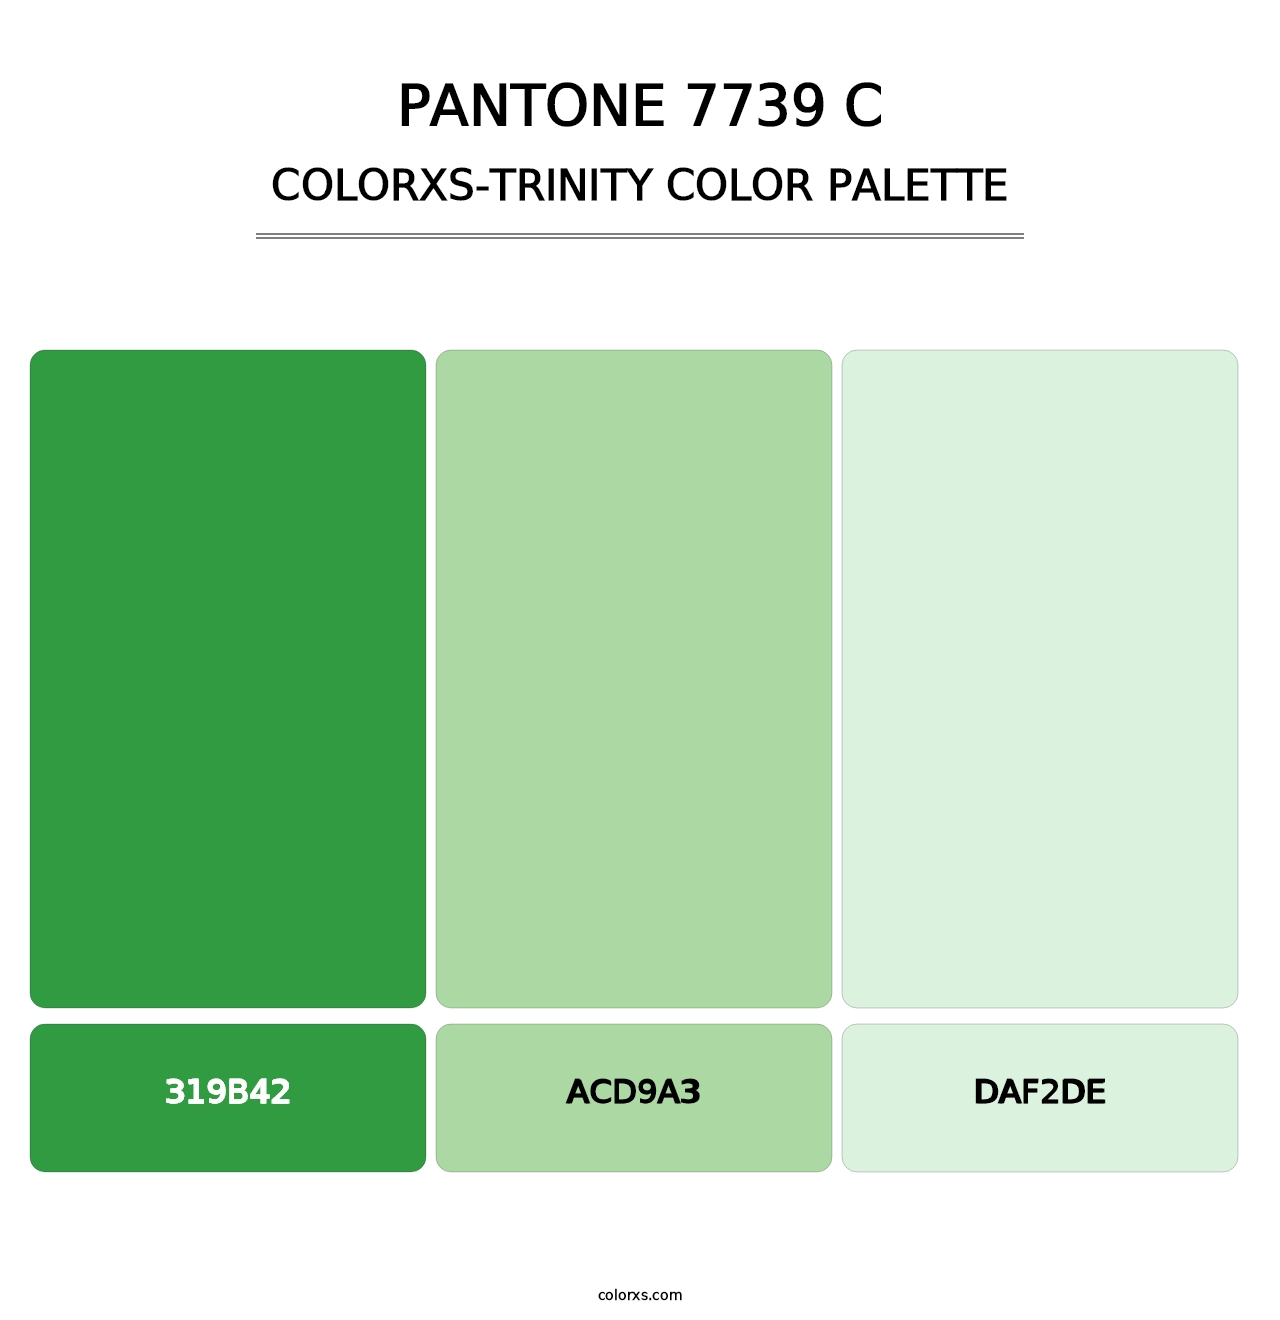 PANTONE 7739 C - Colorxs Trinity Palette